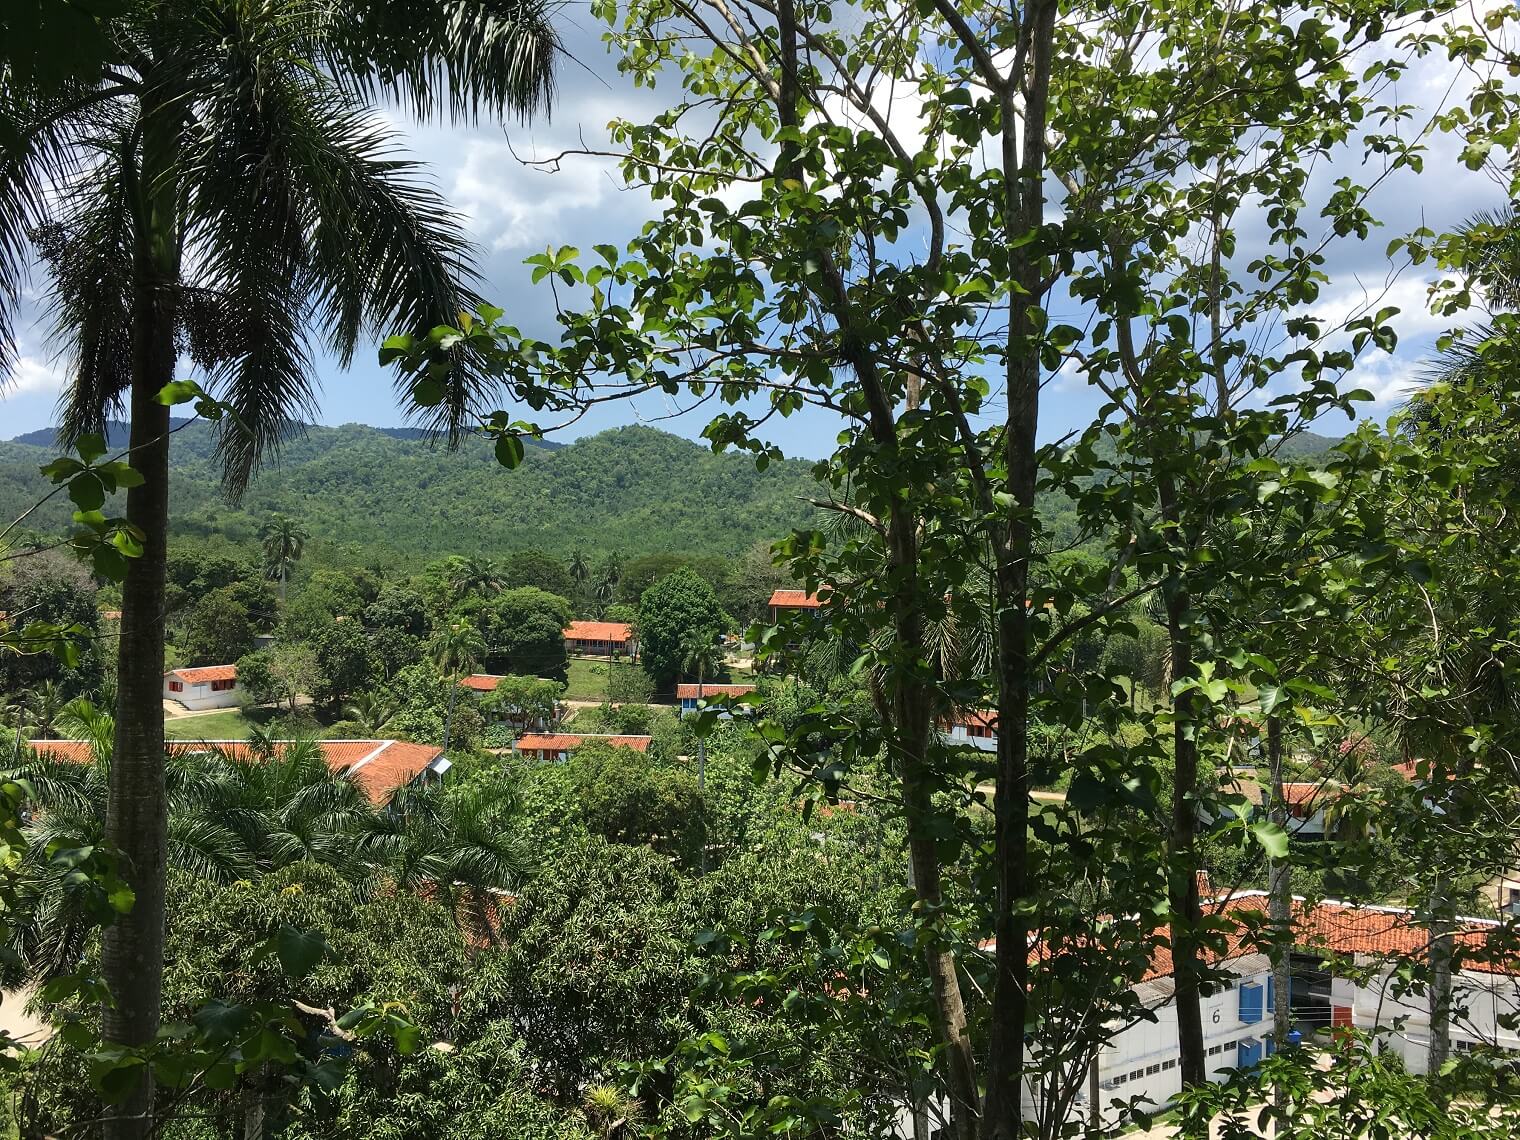 Beautiful forest view of Las Terrazas from the Hotel Moka balcony